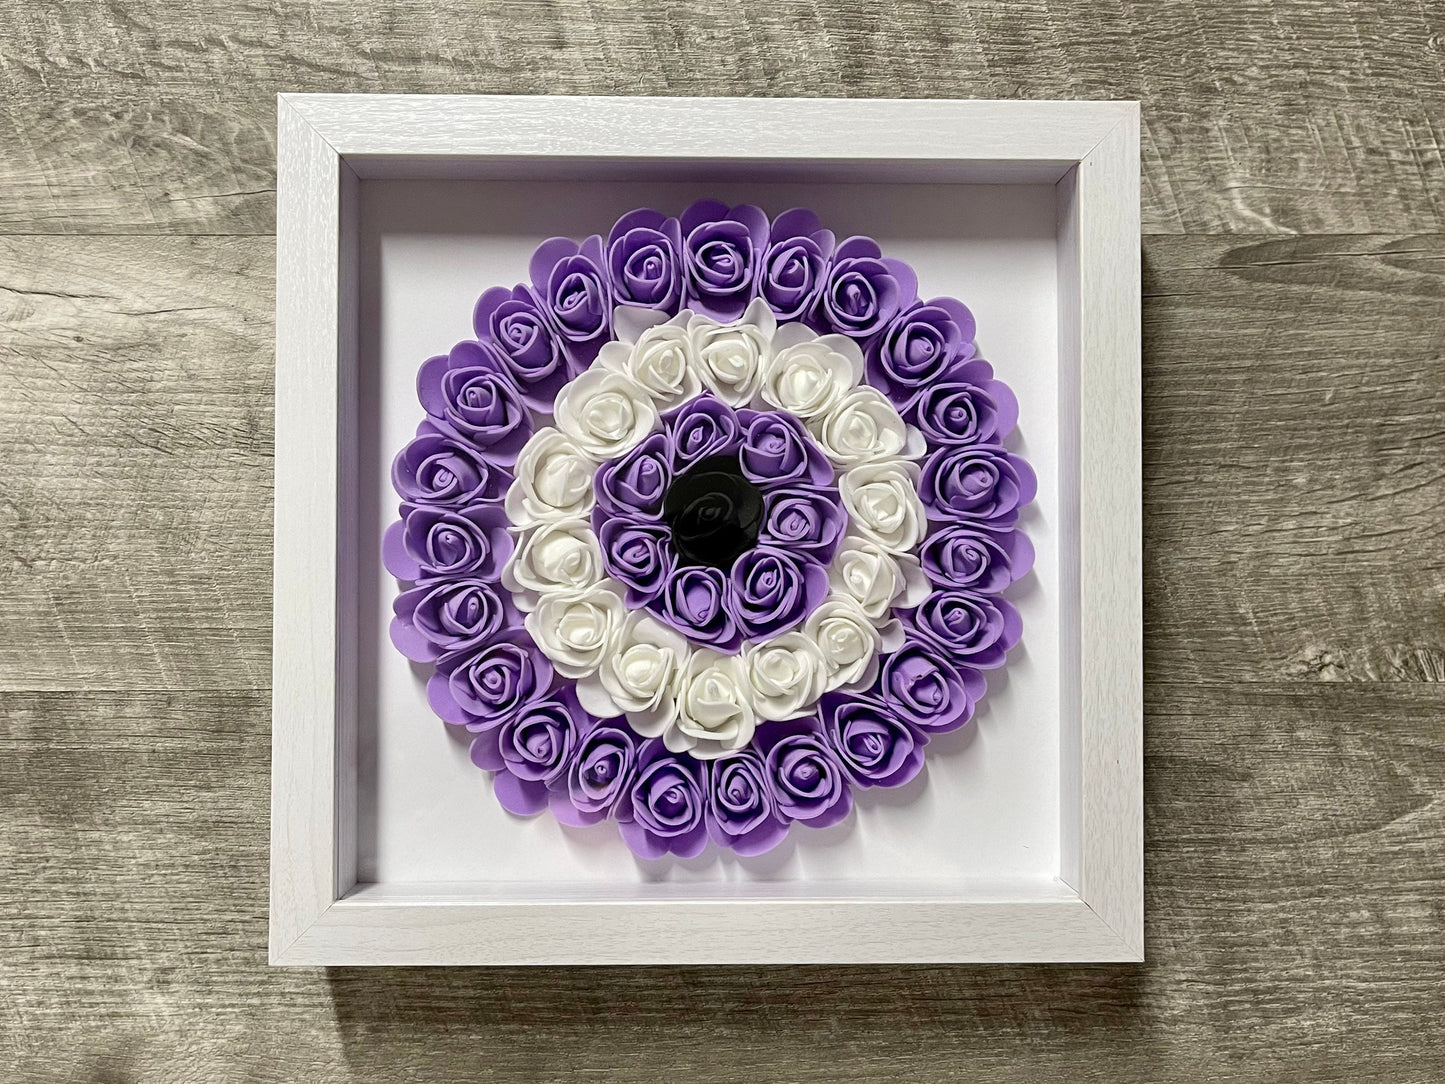 9” x 9” Handmade Multi Color Evil Eye Nazar Boncuk Mal De Ojo Rose Flower Shadowbox -- FAST Shipping!